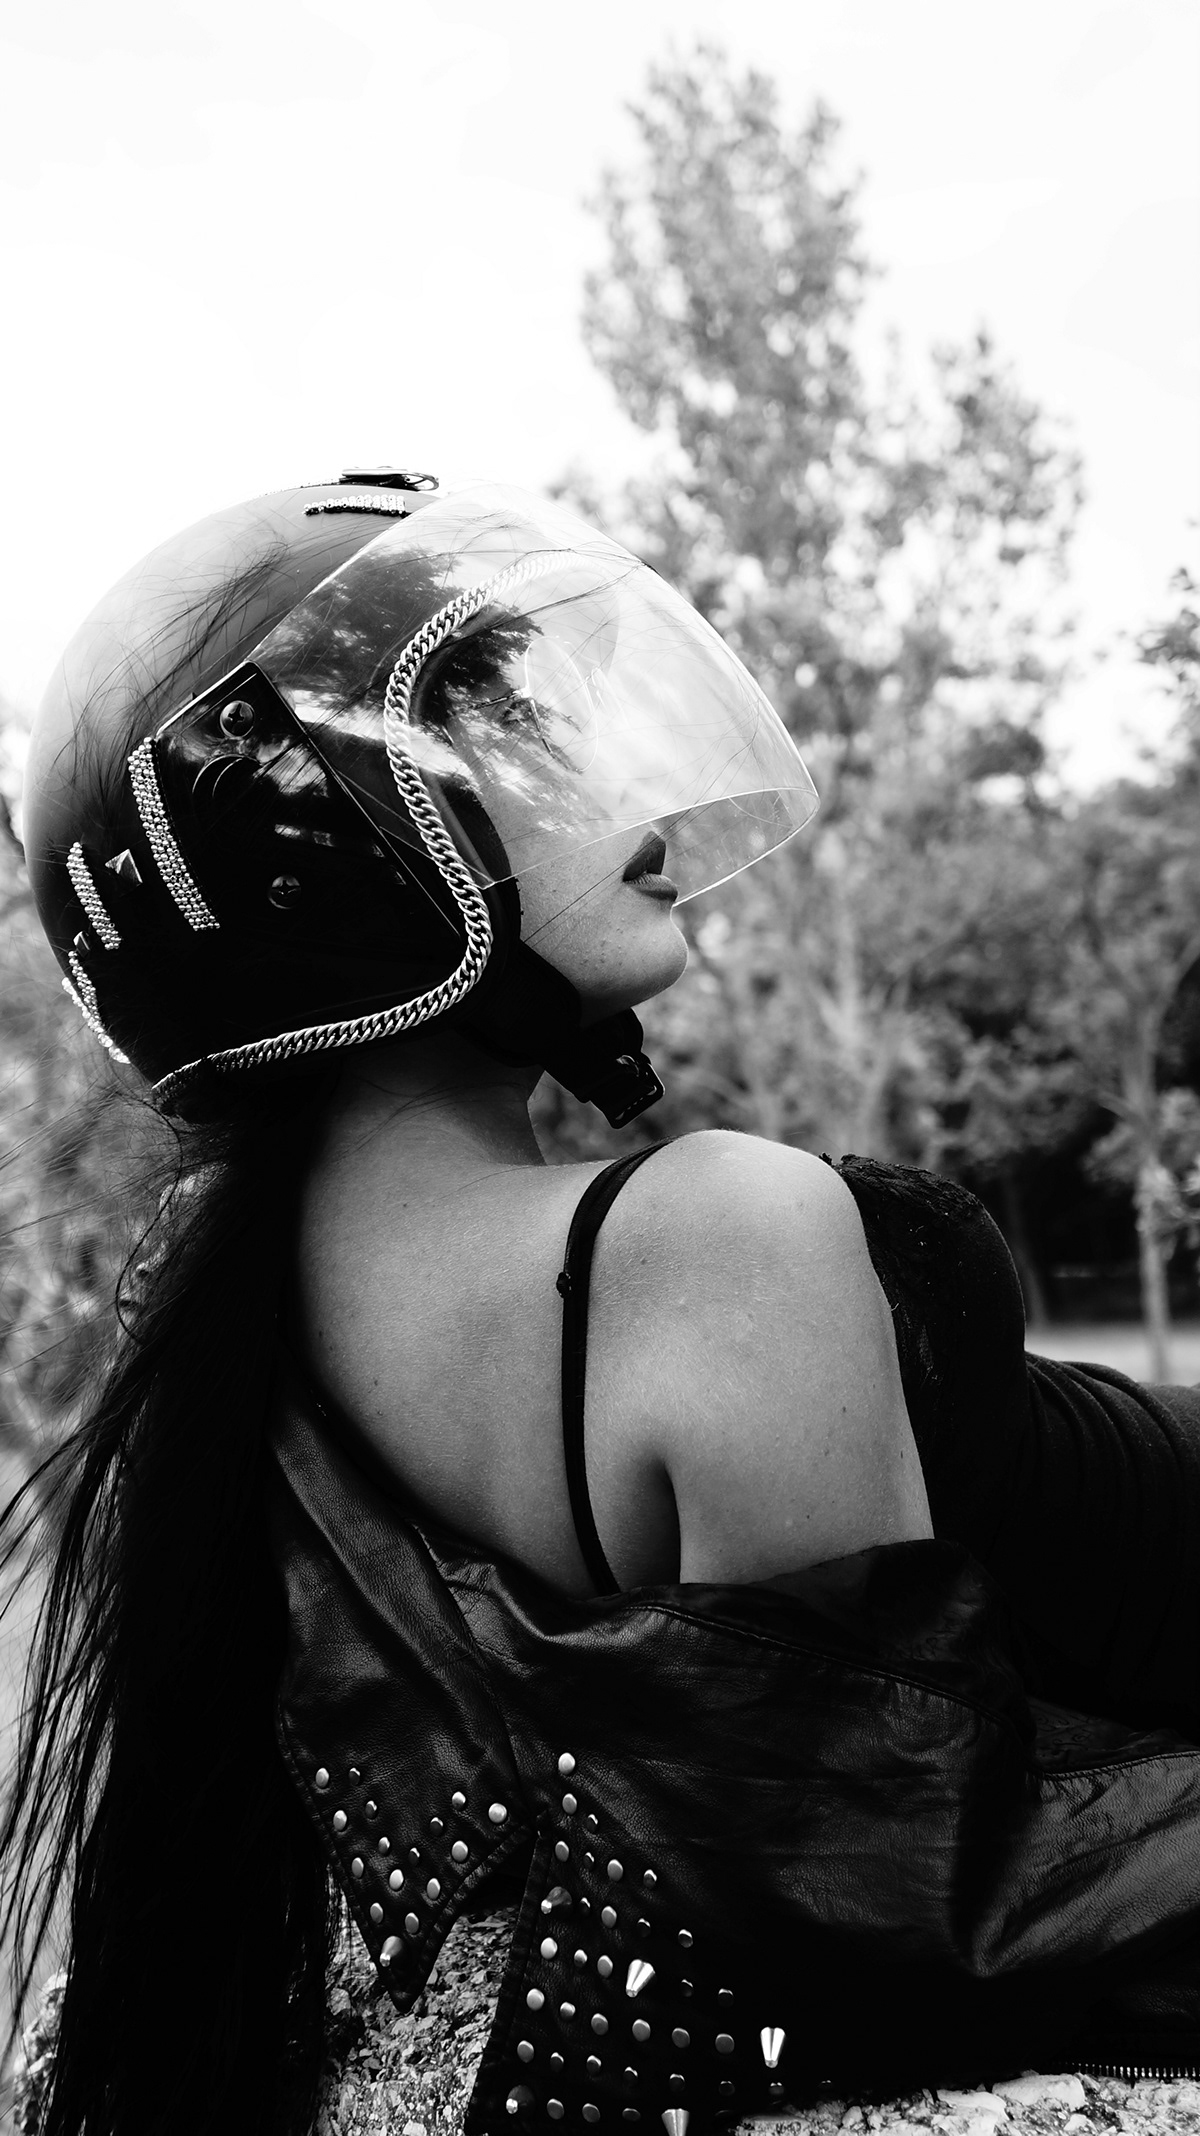 gvanca giorgobiani design luka machablishvili Helmet motorcycle